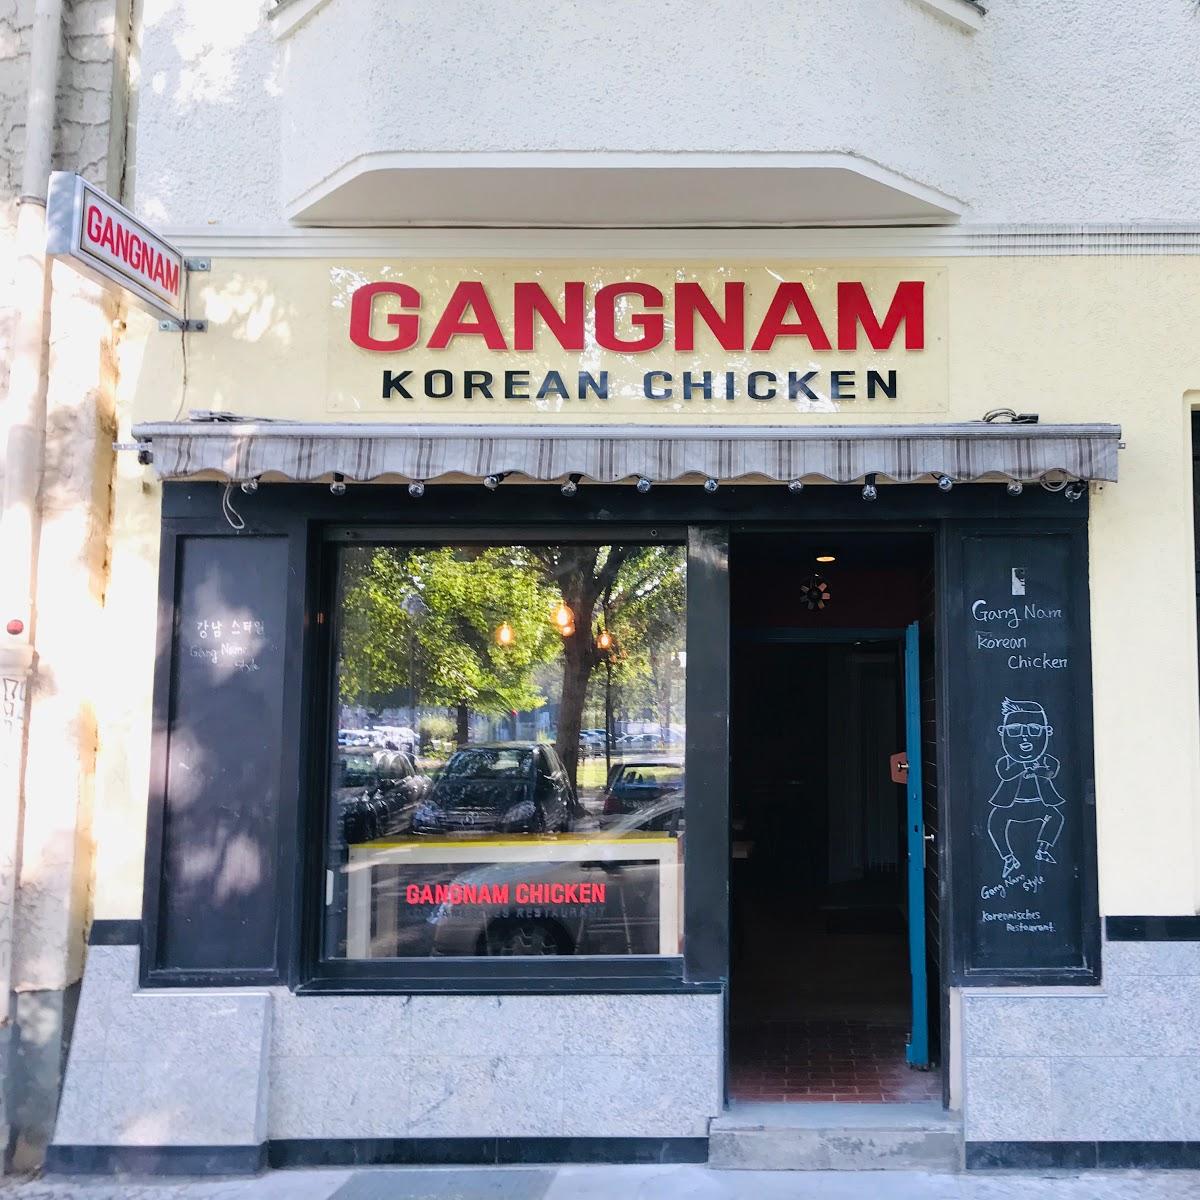 Gangnam - Korean Chicken Restaurant